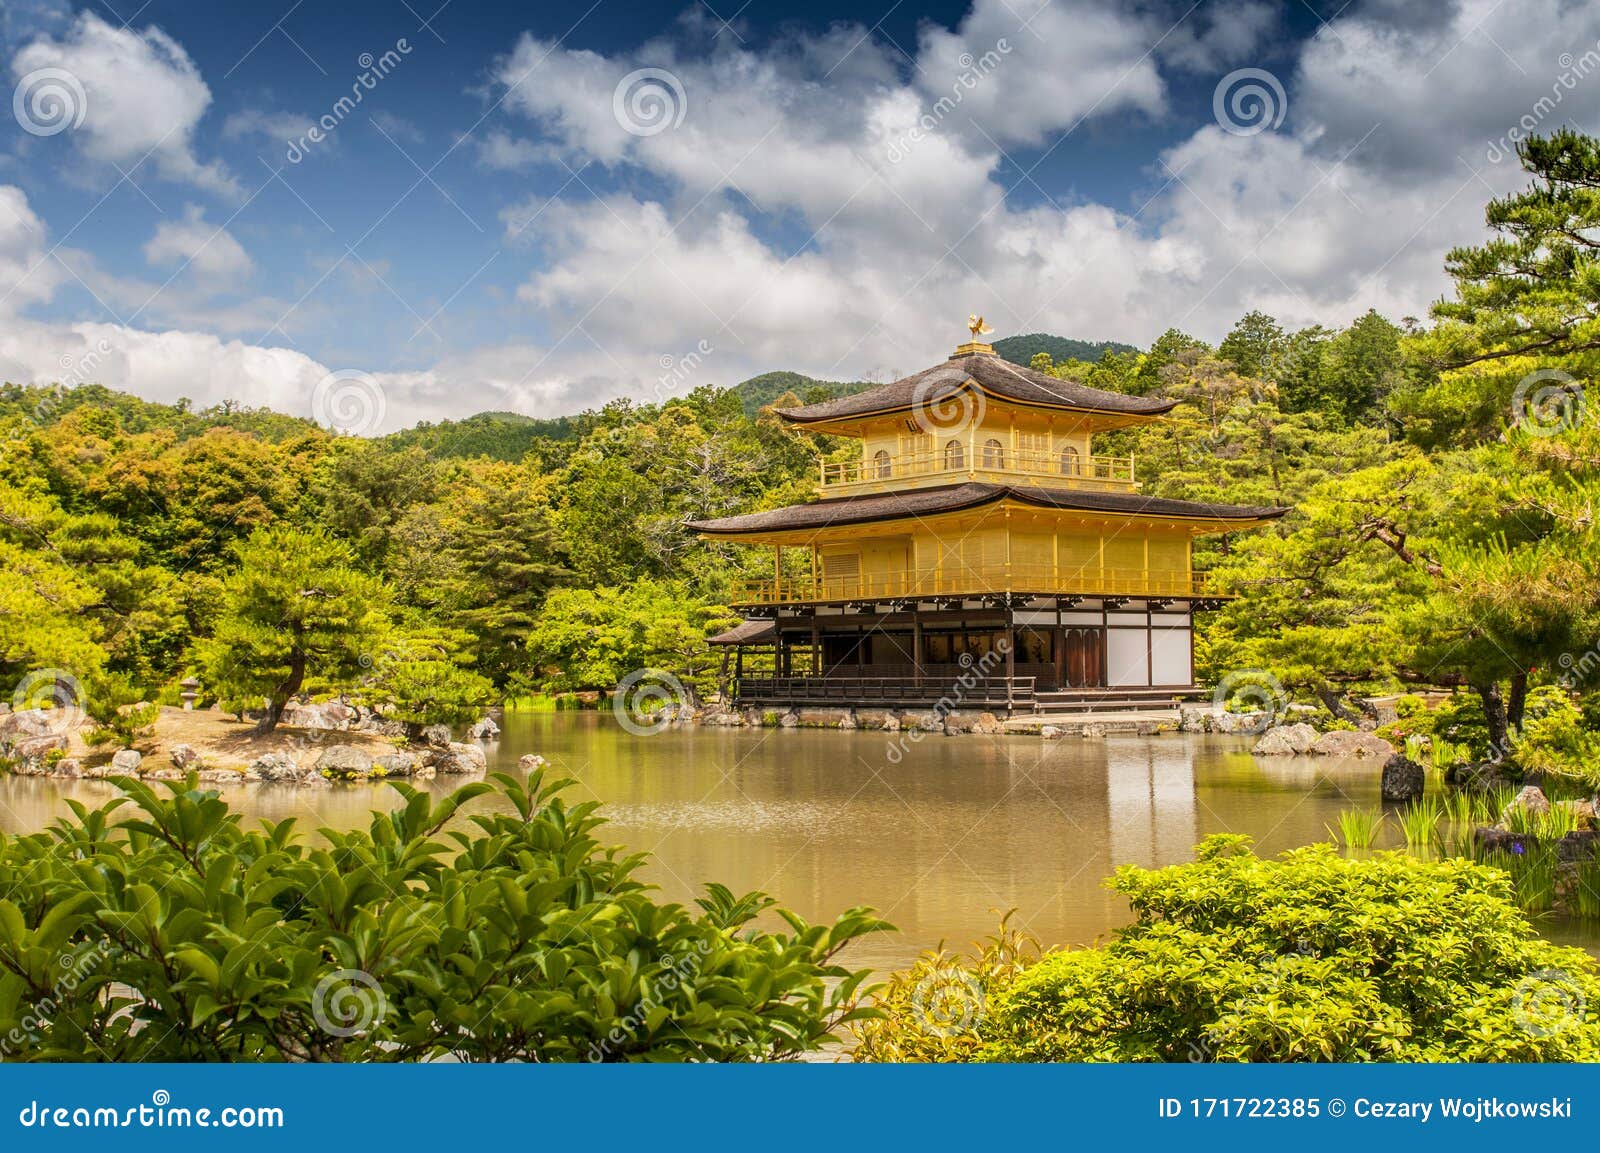 Golden Pavilion at Kinkakuji Temple, Kyoto Japan Editorial Image ...